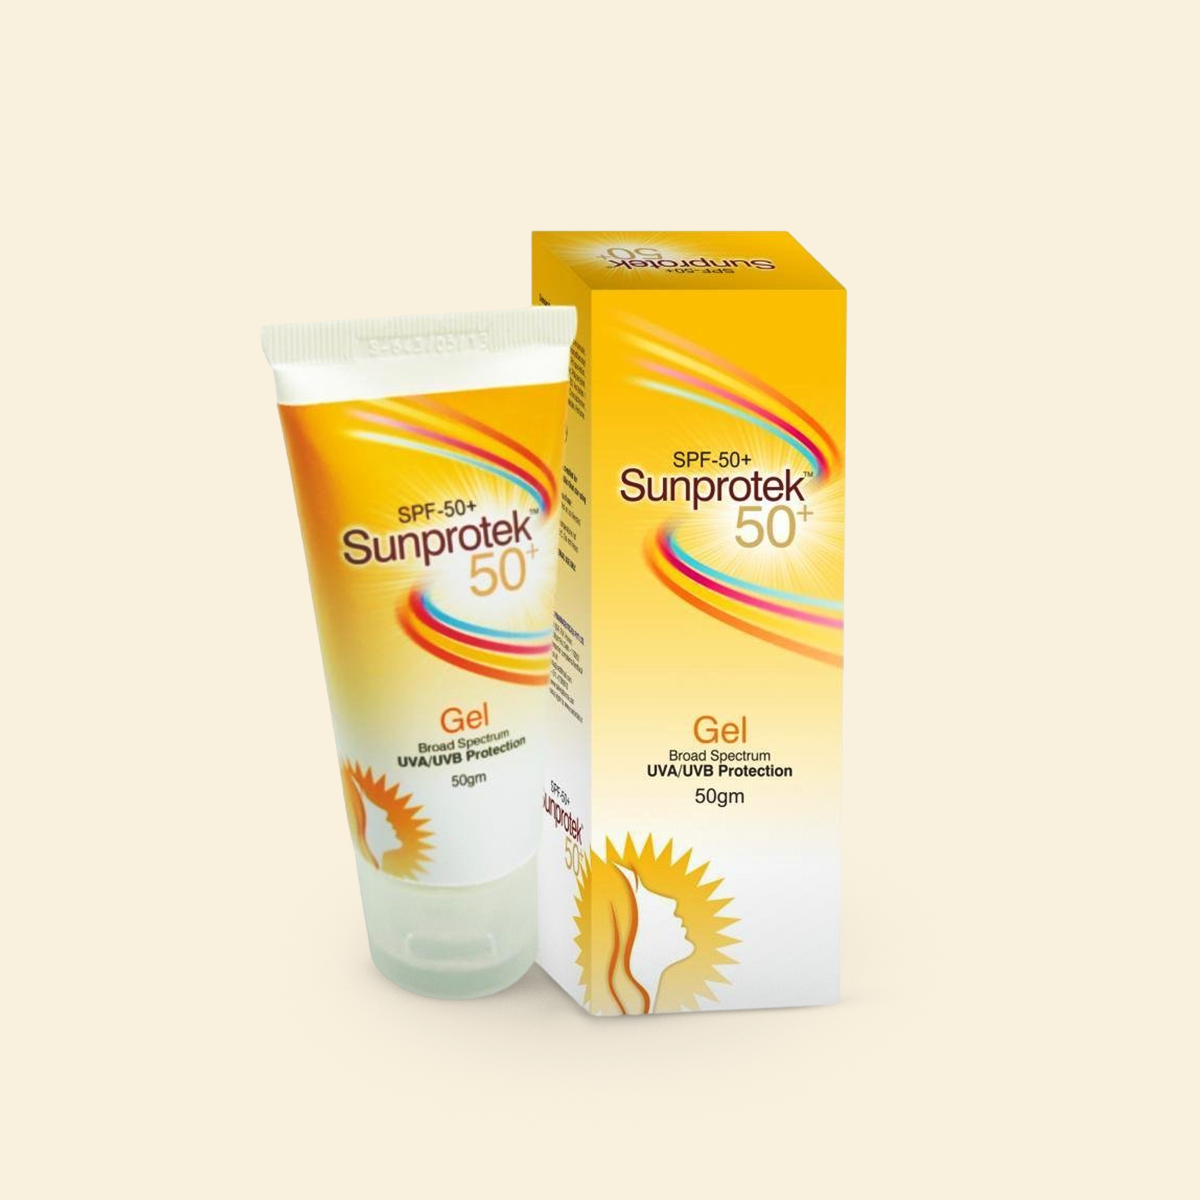 Salve Sunprotek,Father's day Pack of 1 Sunprotek SPF 50+ Sunscreen Gel With UVA/UVB protection